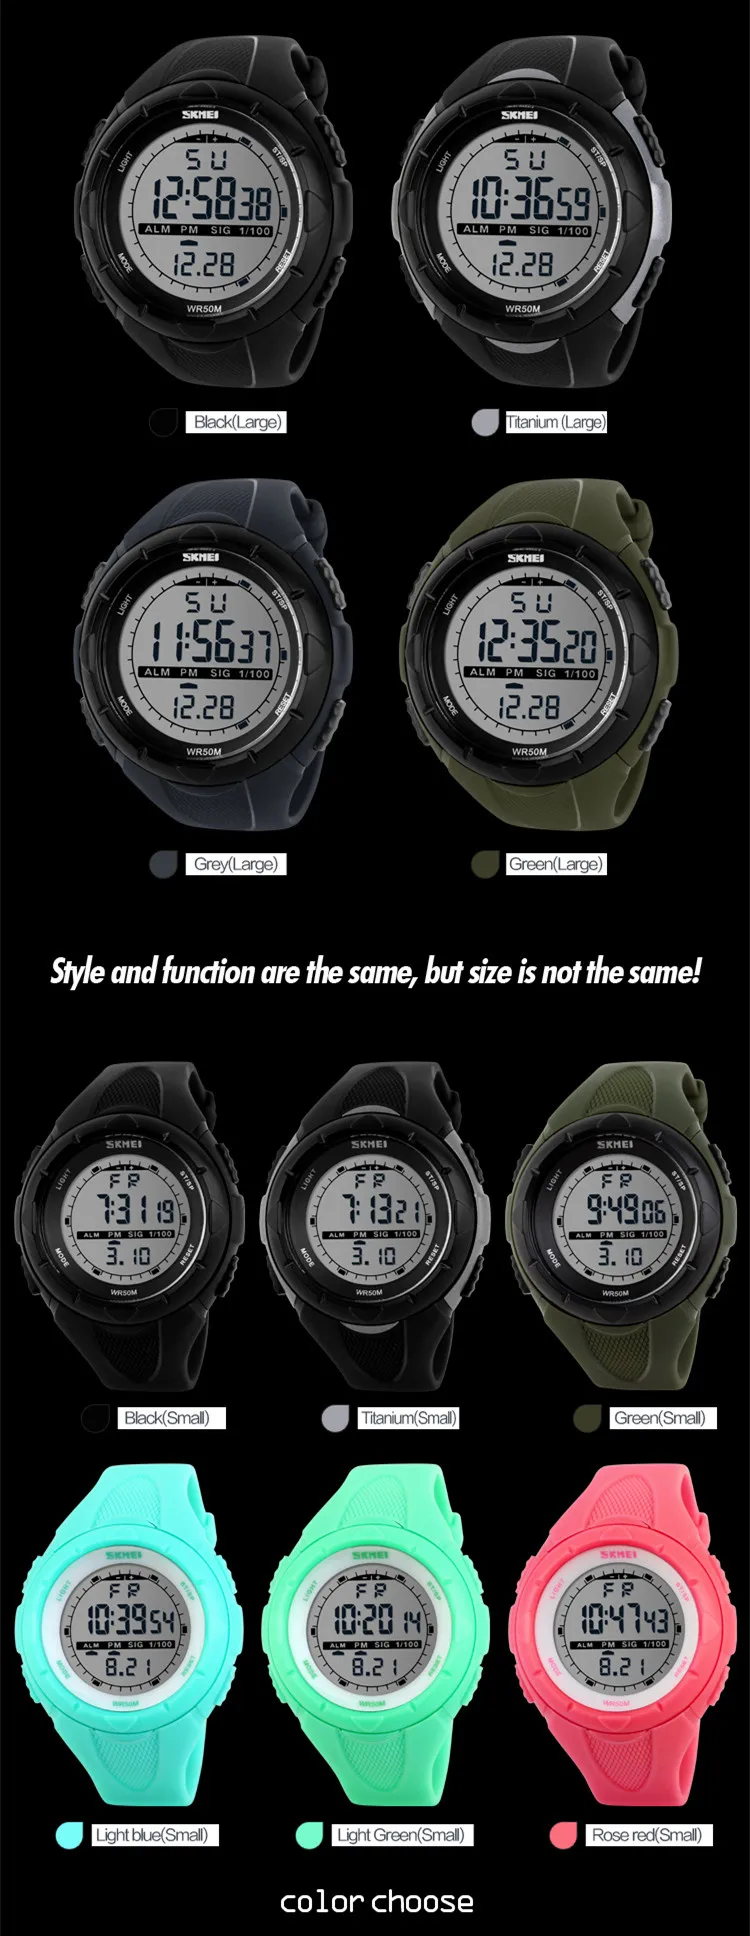 Skmei 1025 high quality wrist watch for business cheapest relojes original mens casual watches